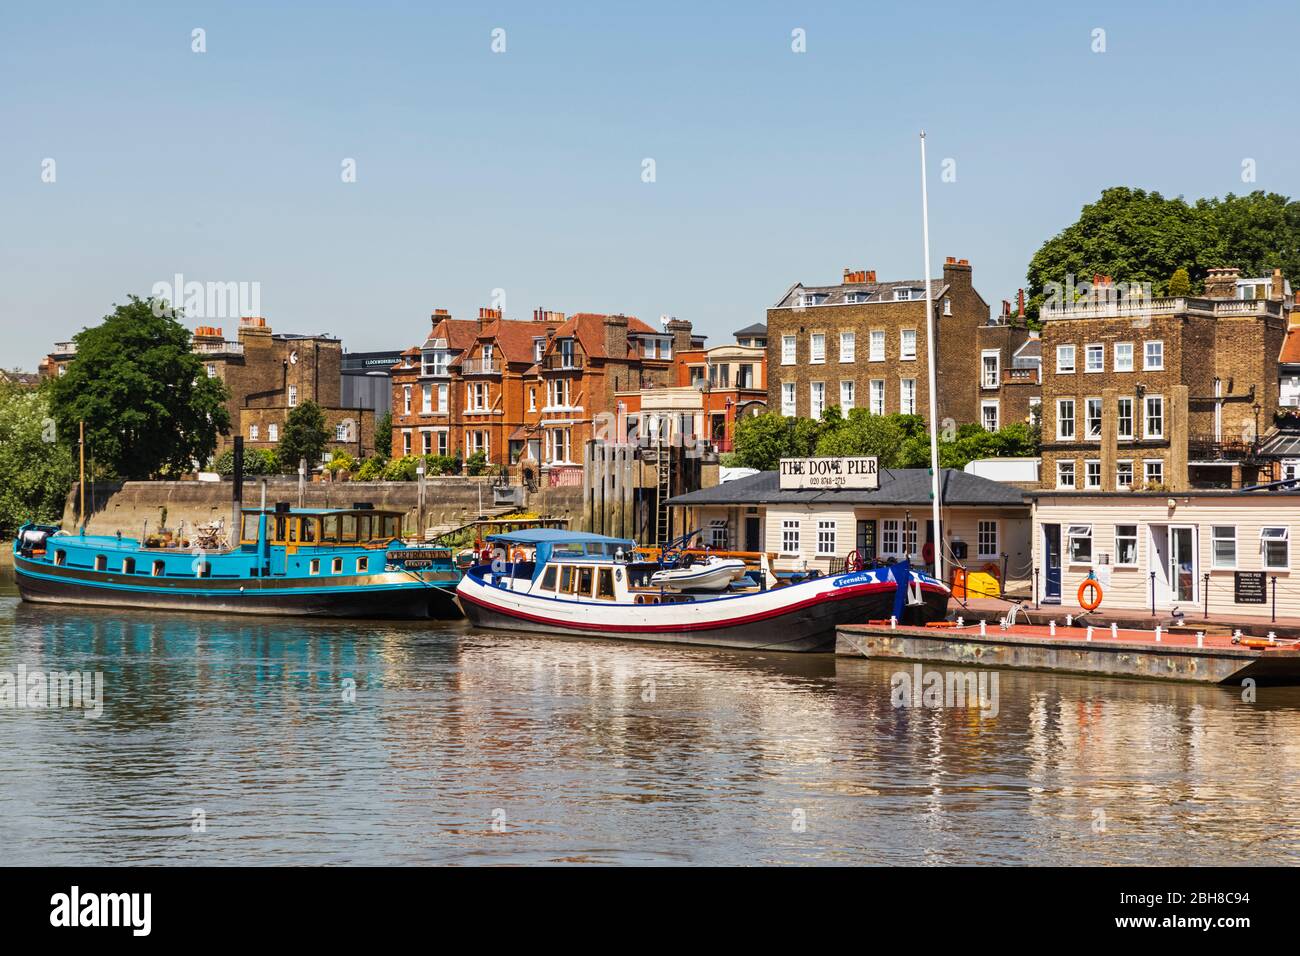 England, London, Hammersmith, The Dove Pier Stock Photo